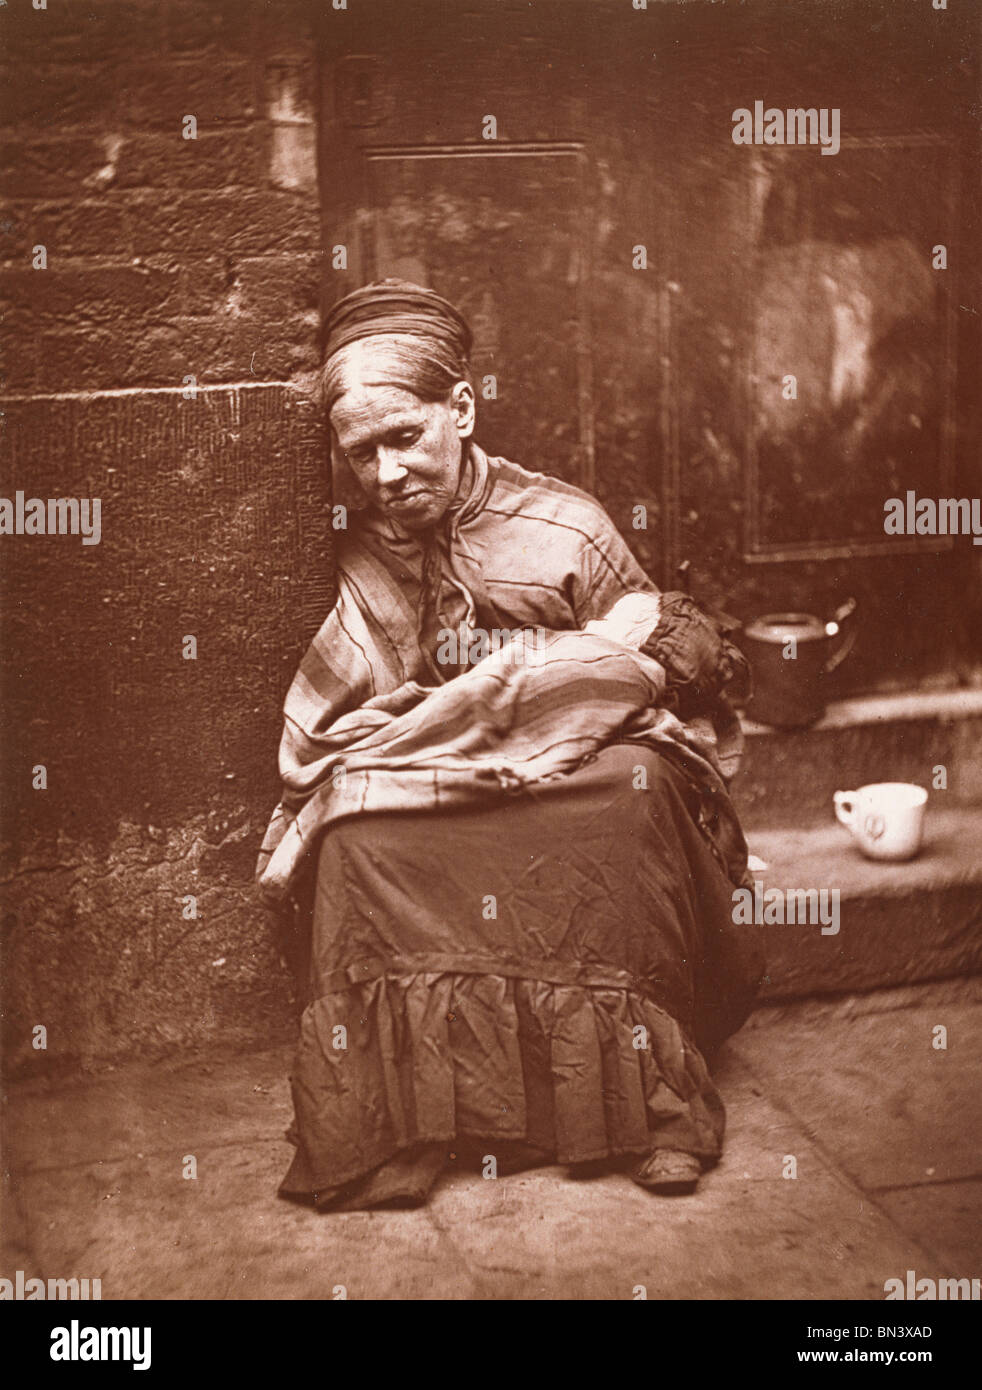 The Crawlers, by John Thomson. London, England, late 19th century Stock Photo